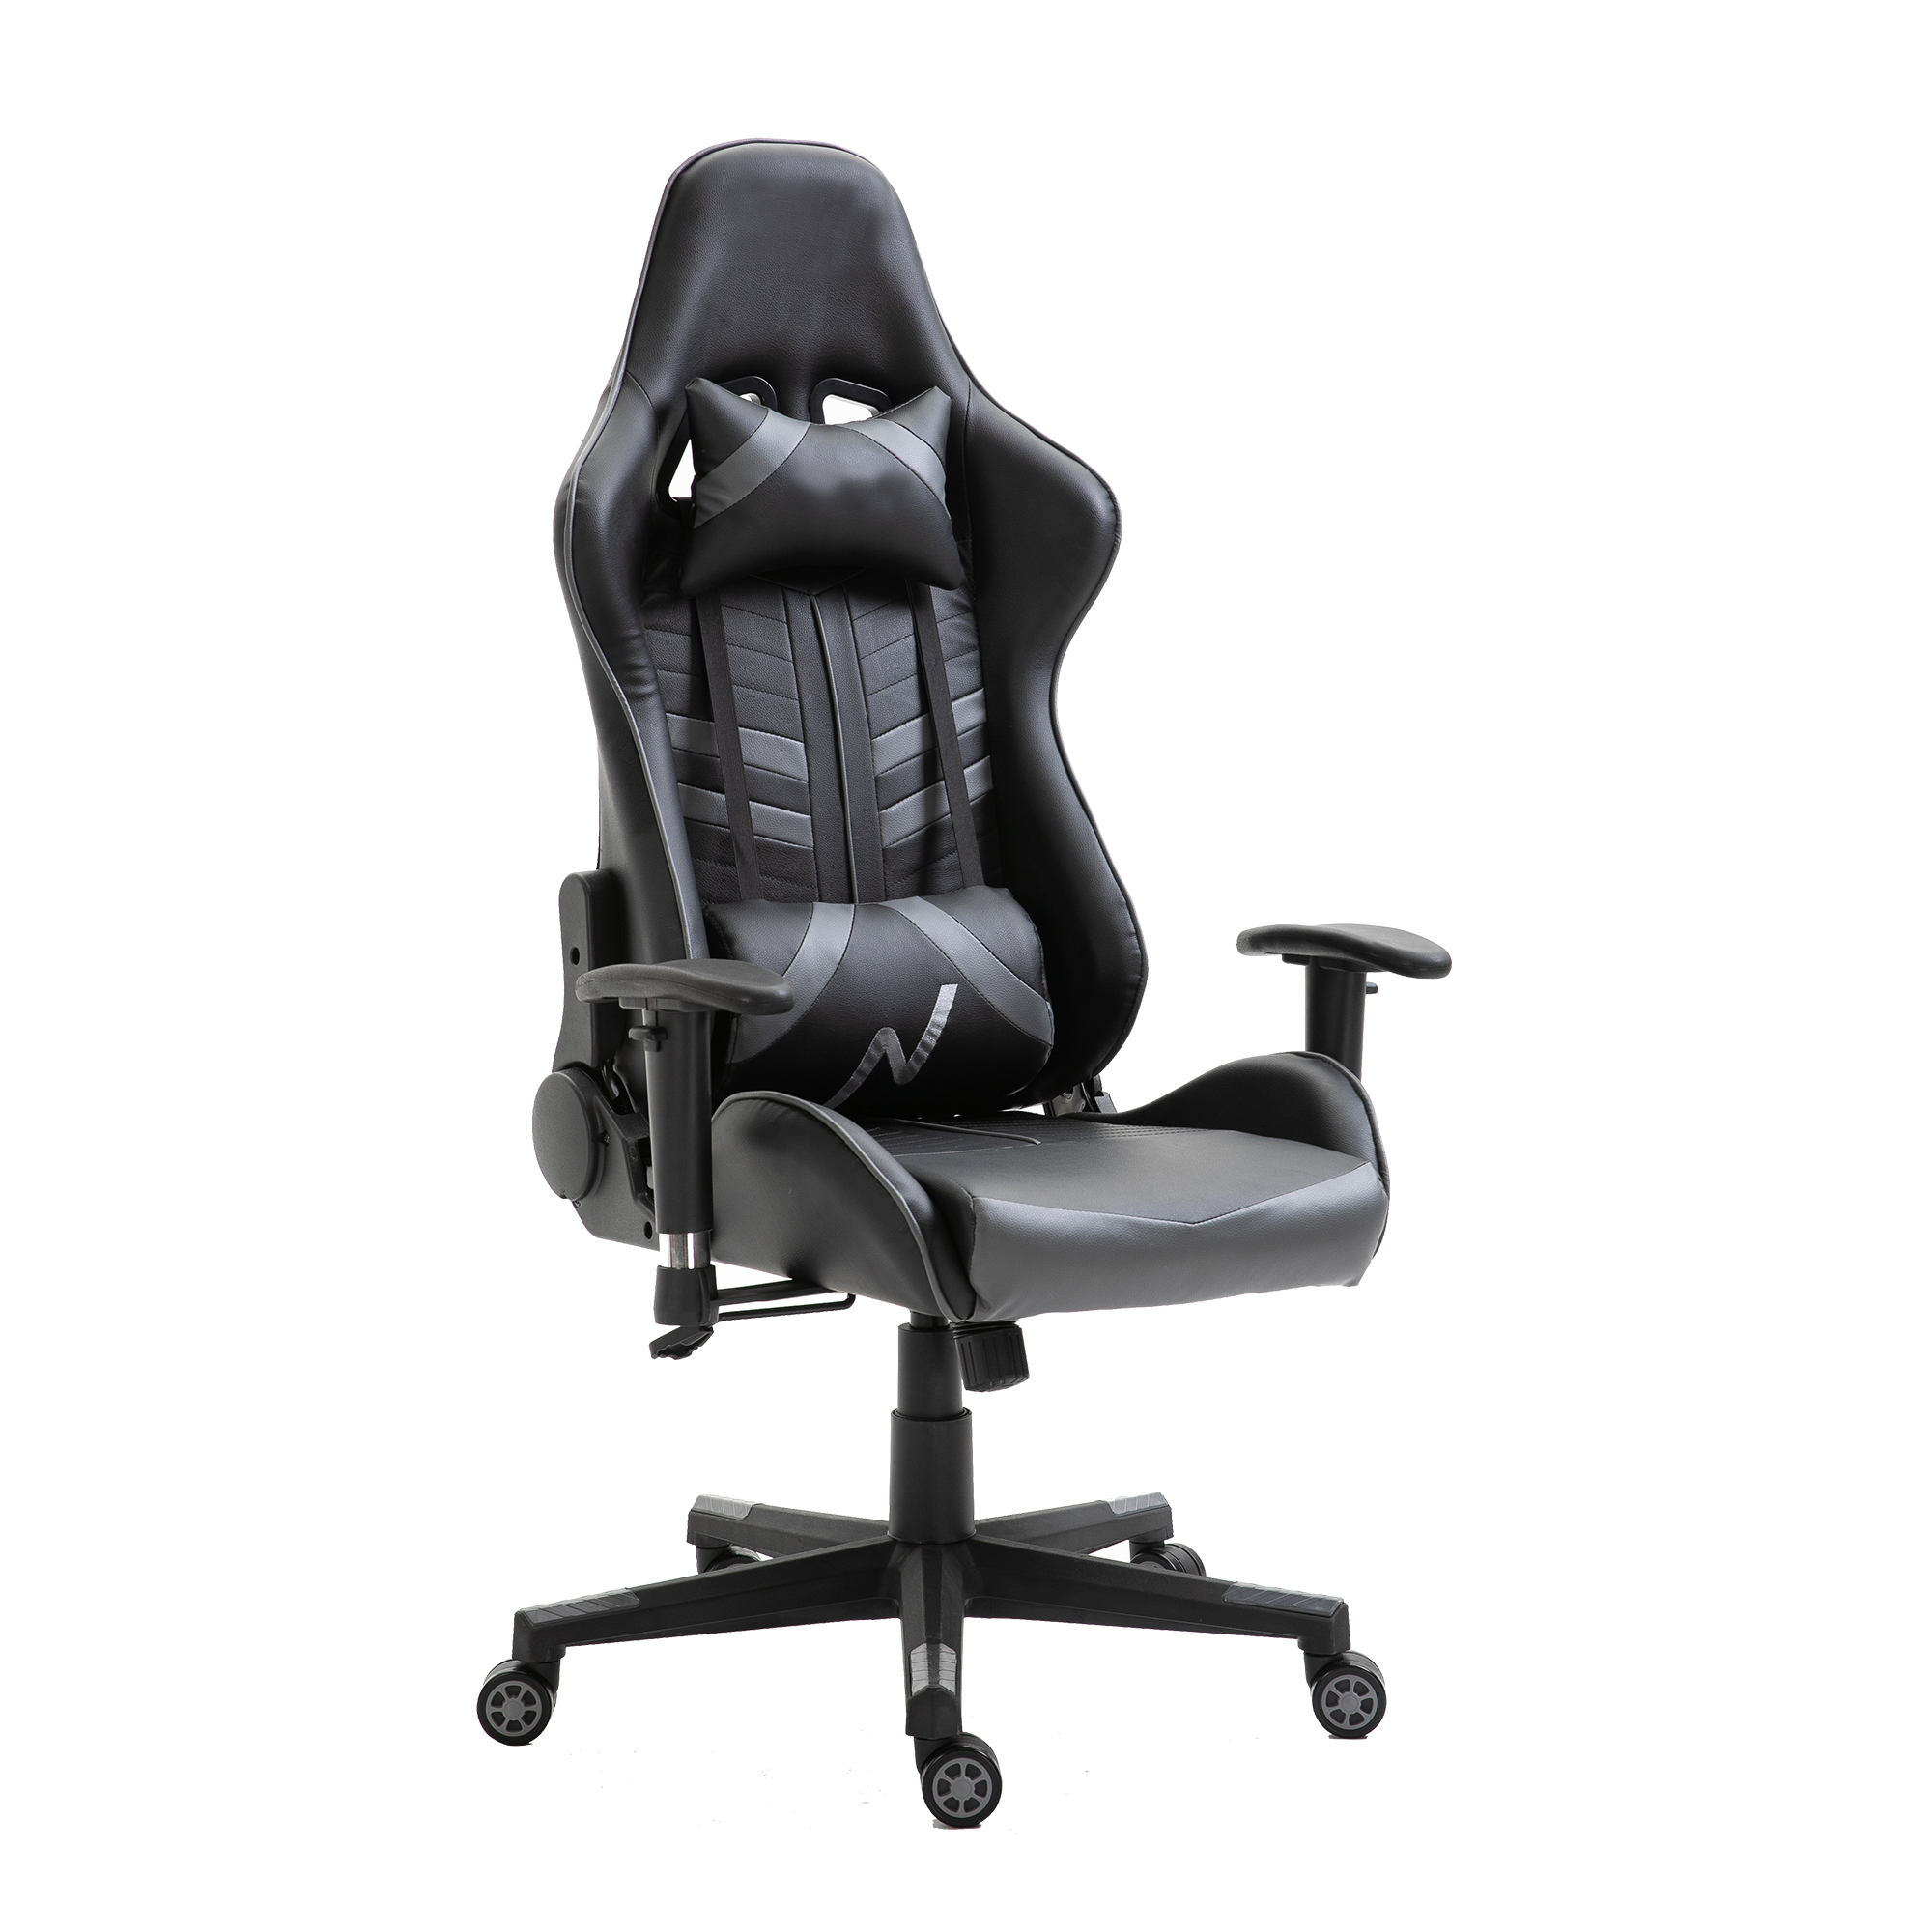 https://www.gamingchairsoem.com/pu-leather-gaming-race-chair-swivel-comfortable-ergonomic-racing-gaming-chair-product/